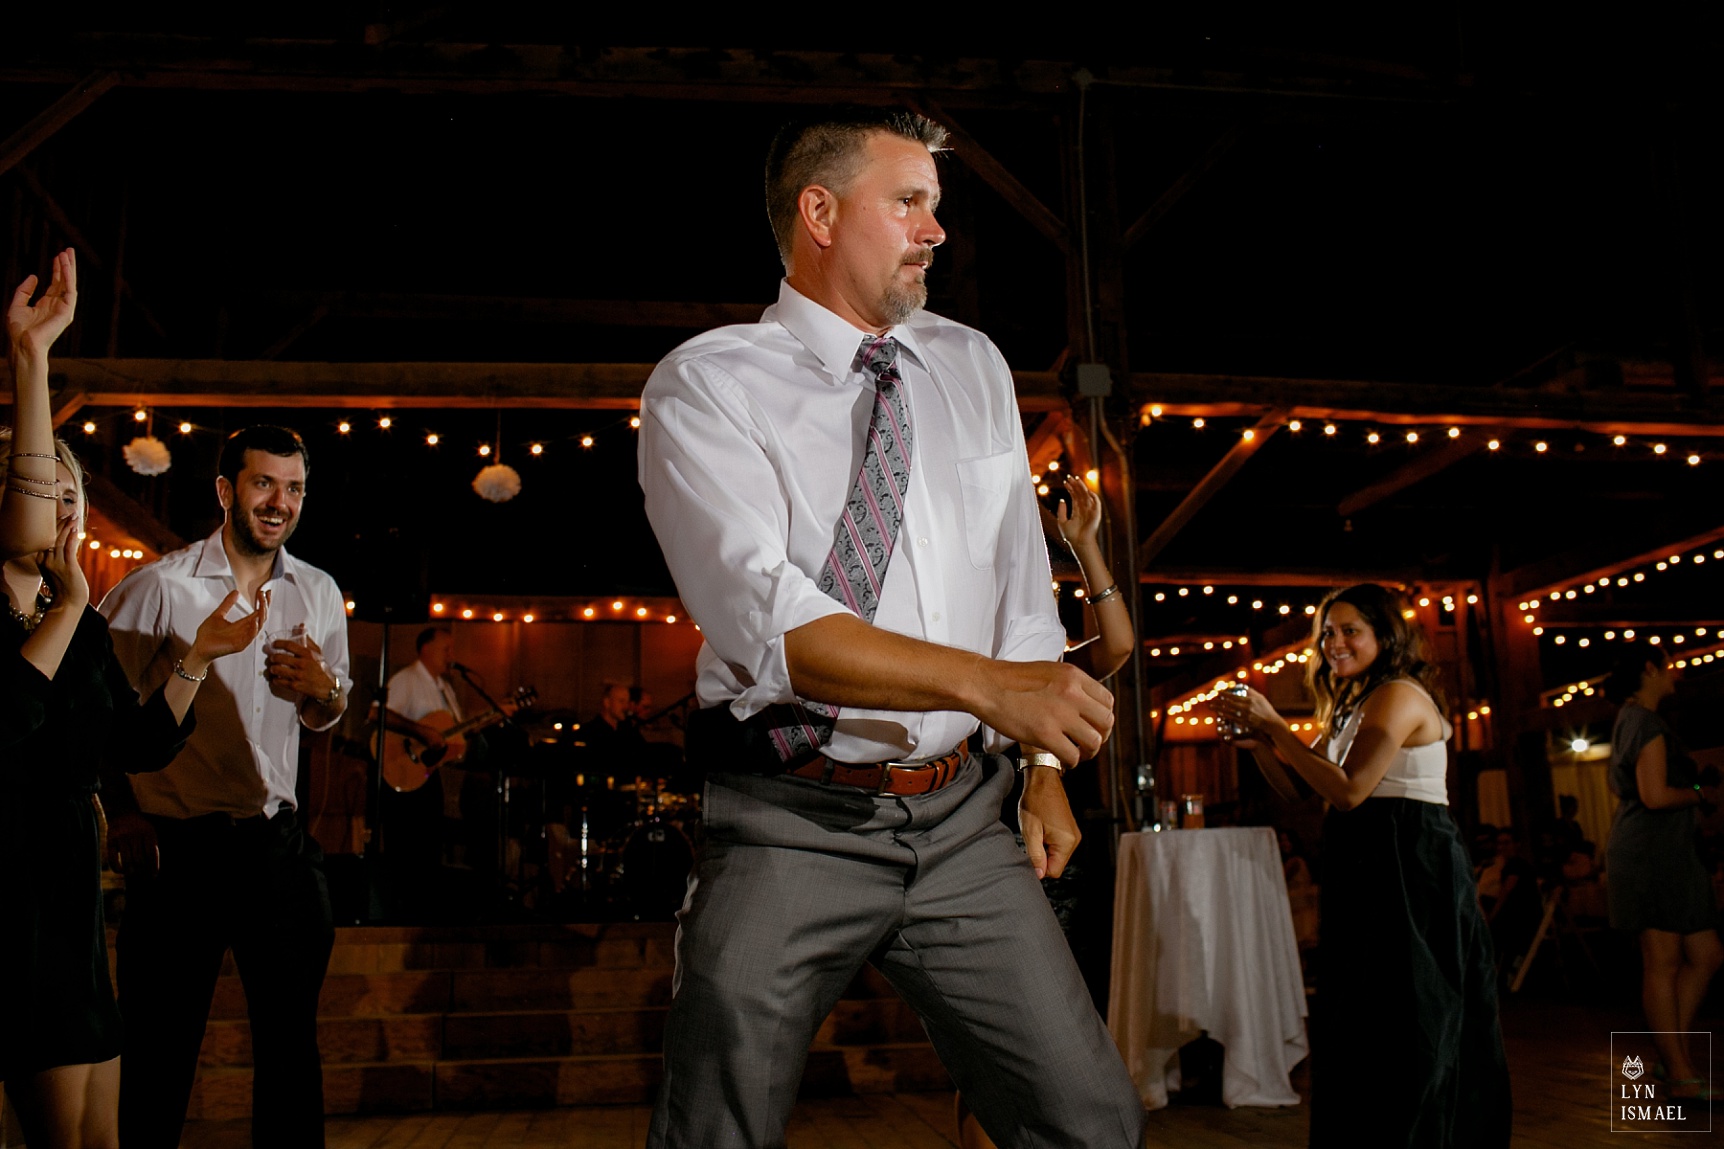 Bride's stepfather dances